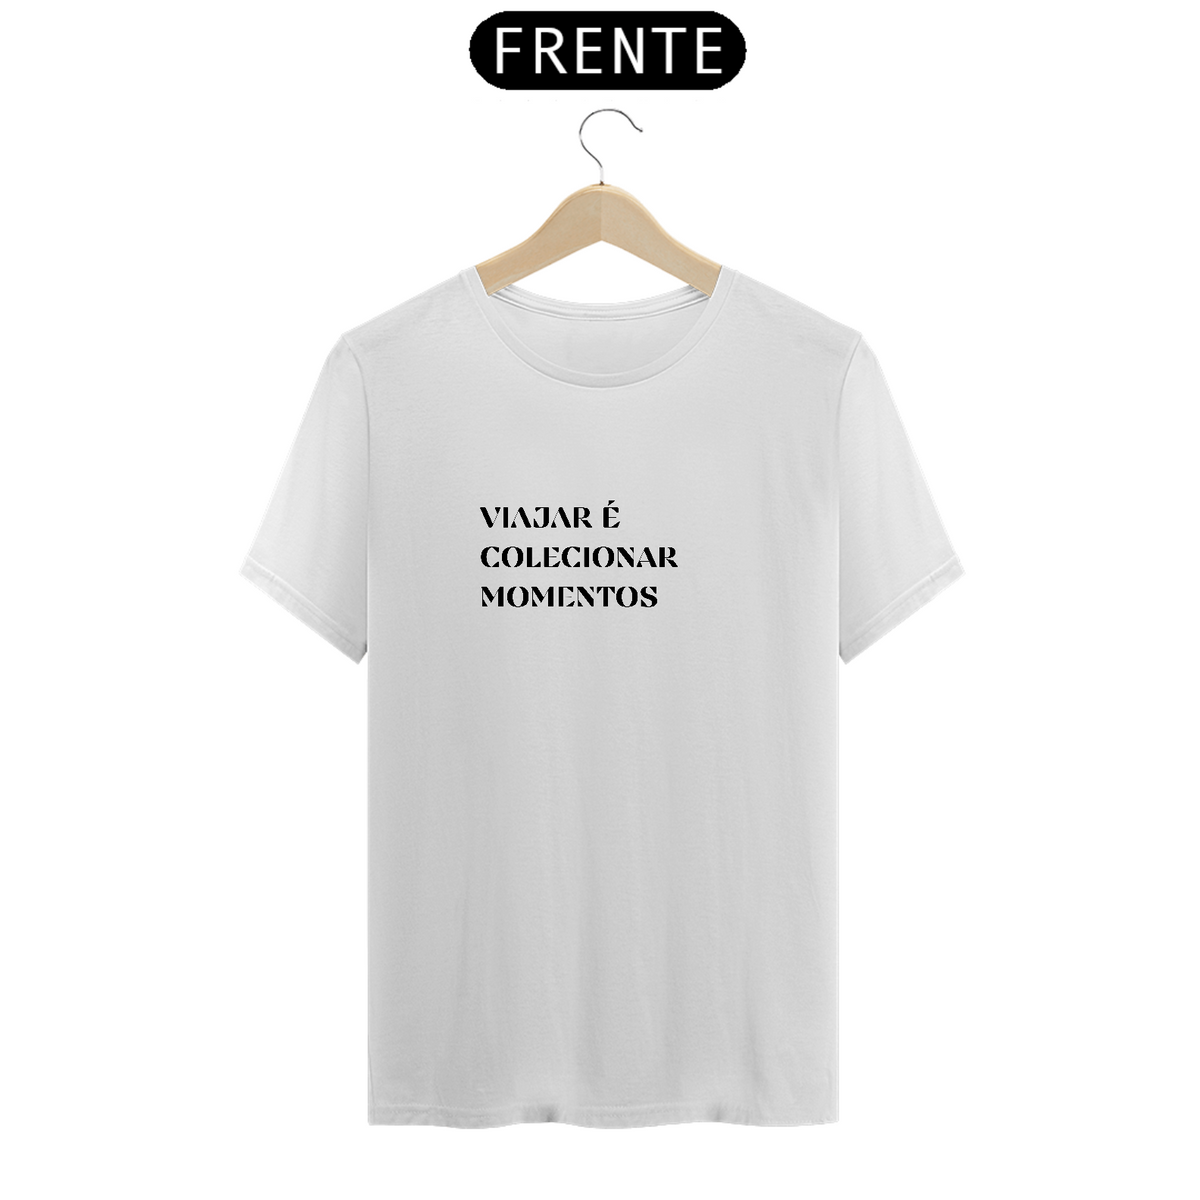 Nome do produto: Camiseta Prime Momentos